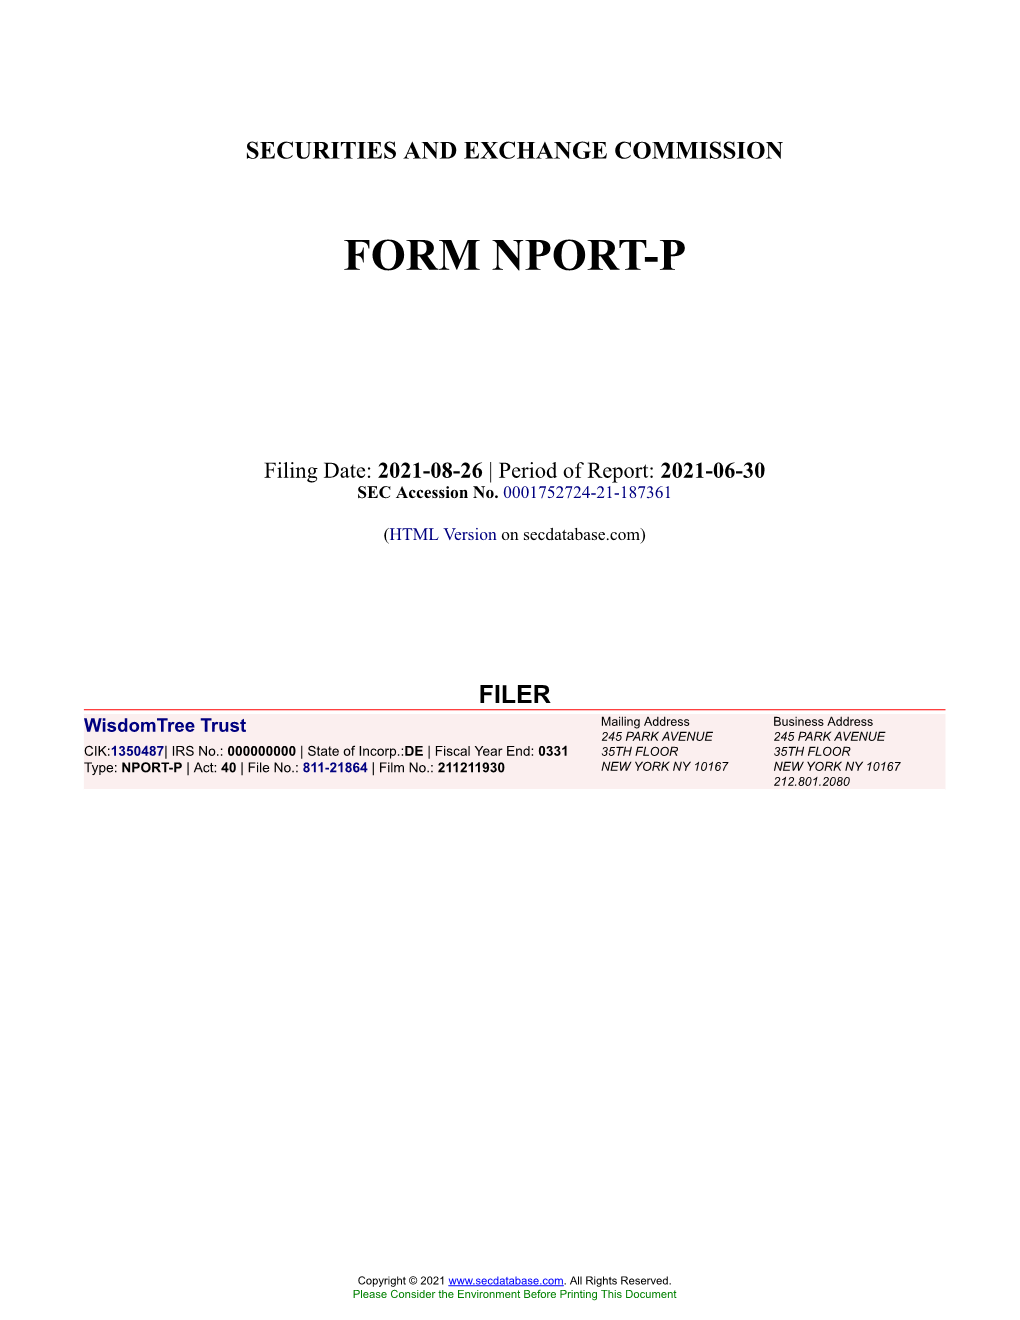 Wisdomtree Trust Form NPORT-P Filed 2021-08-26